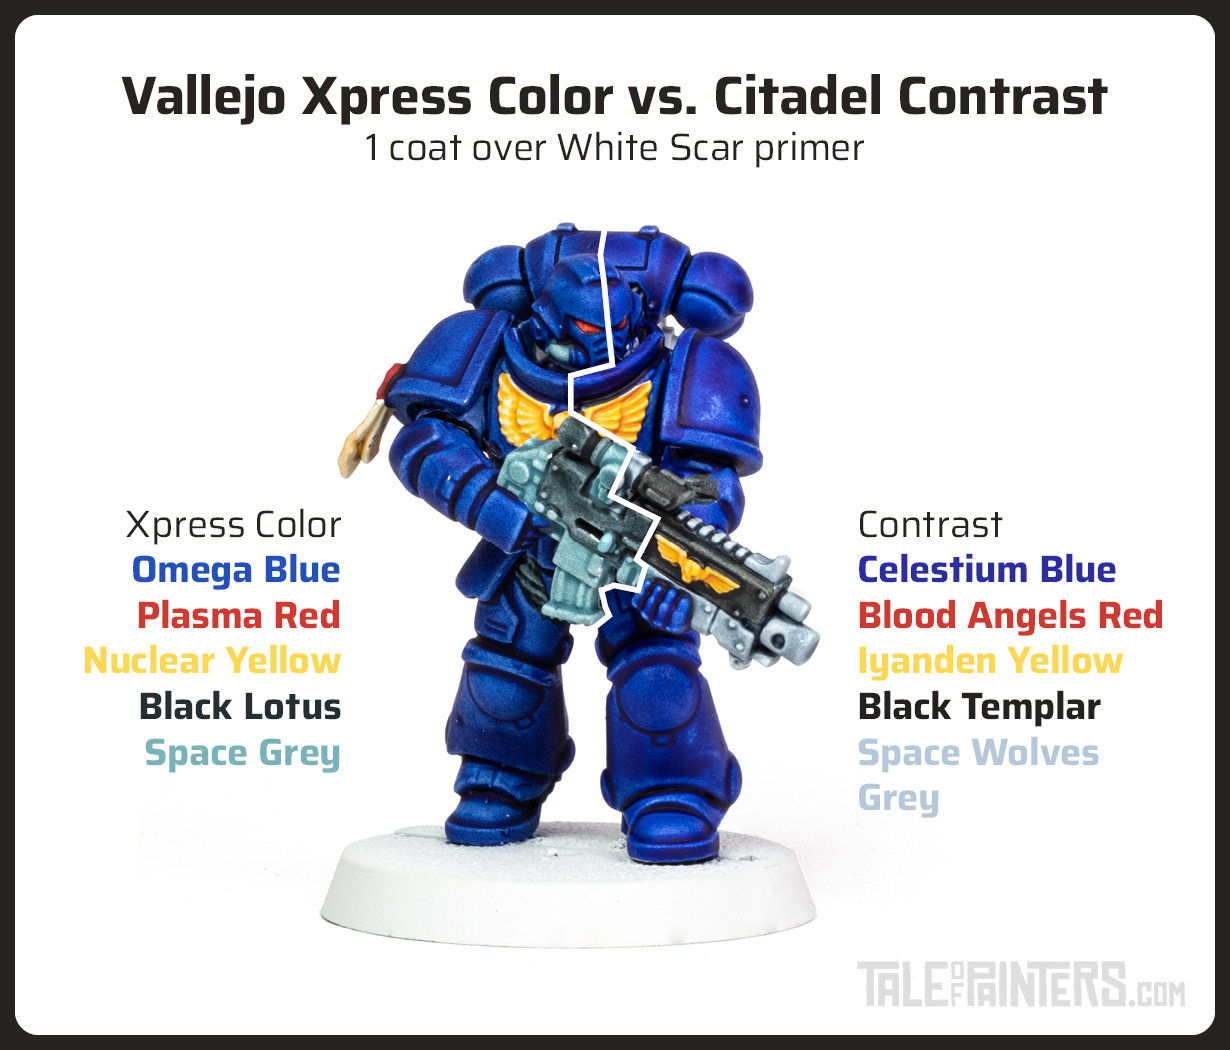 Comparison of Vallejo Xpress Color and Citadel Contrast on a painted Primaris Intercessor